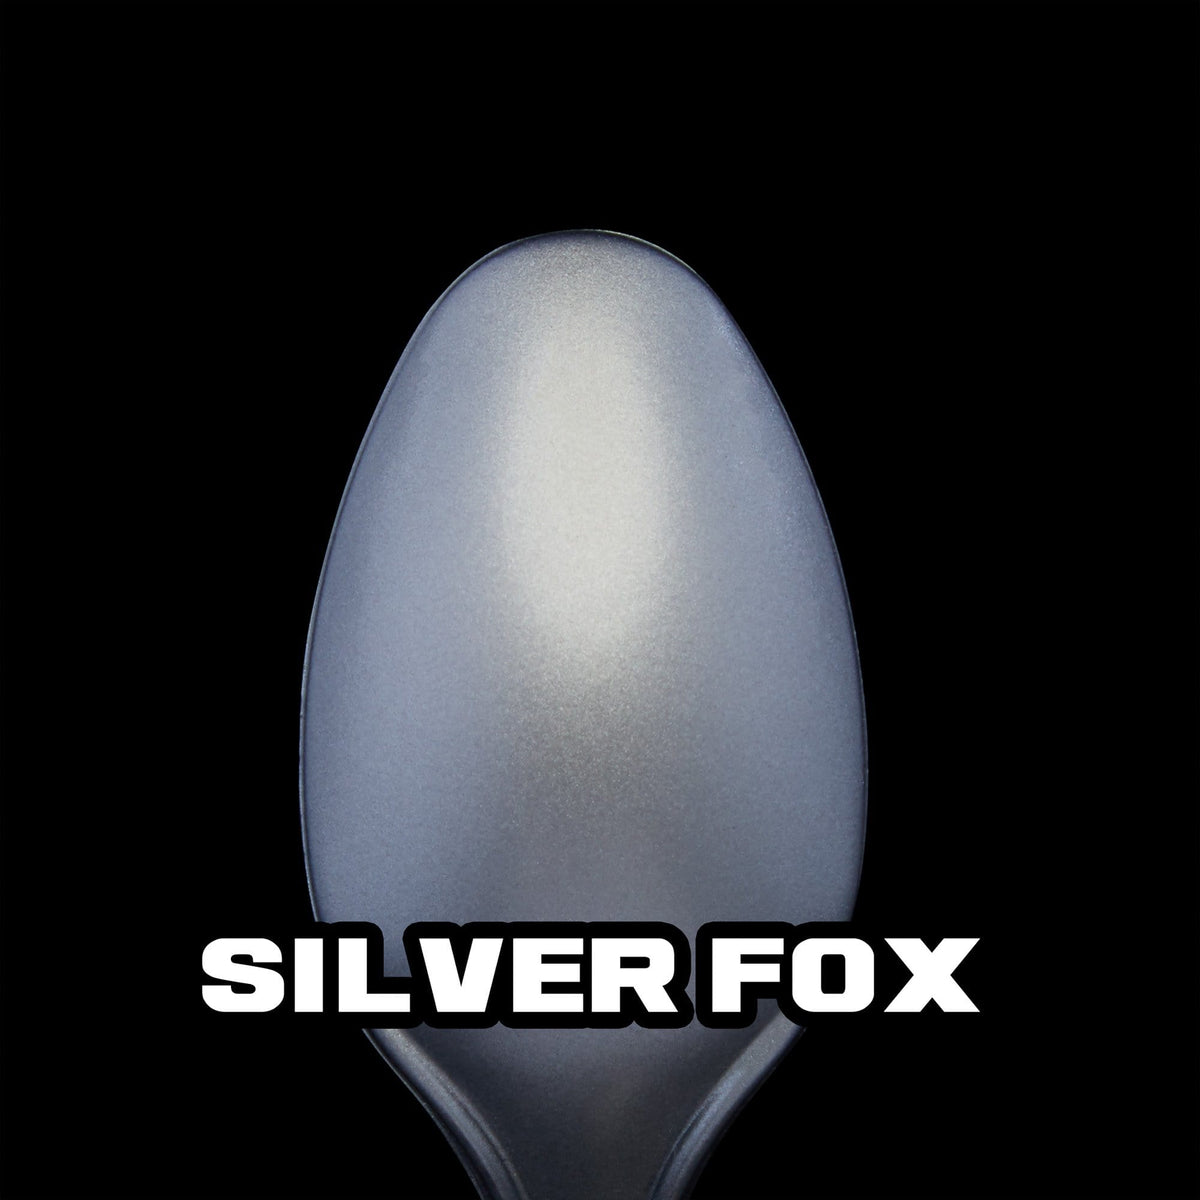 Silver Fox Metallic Acrylic Paint Metallic Turbo Dork Exit 23 Games Silver Fox Metallic Acrylic Paint